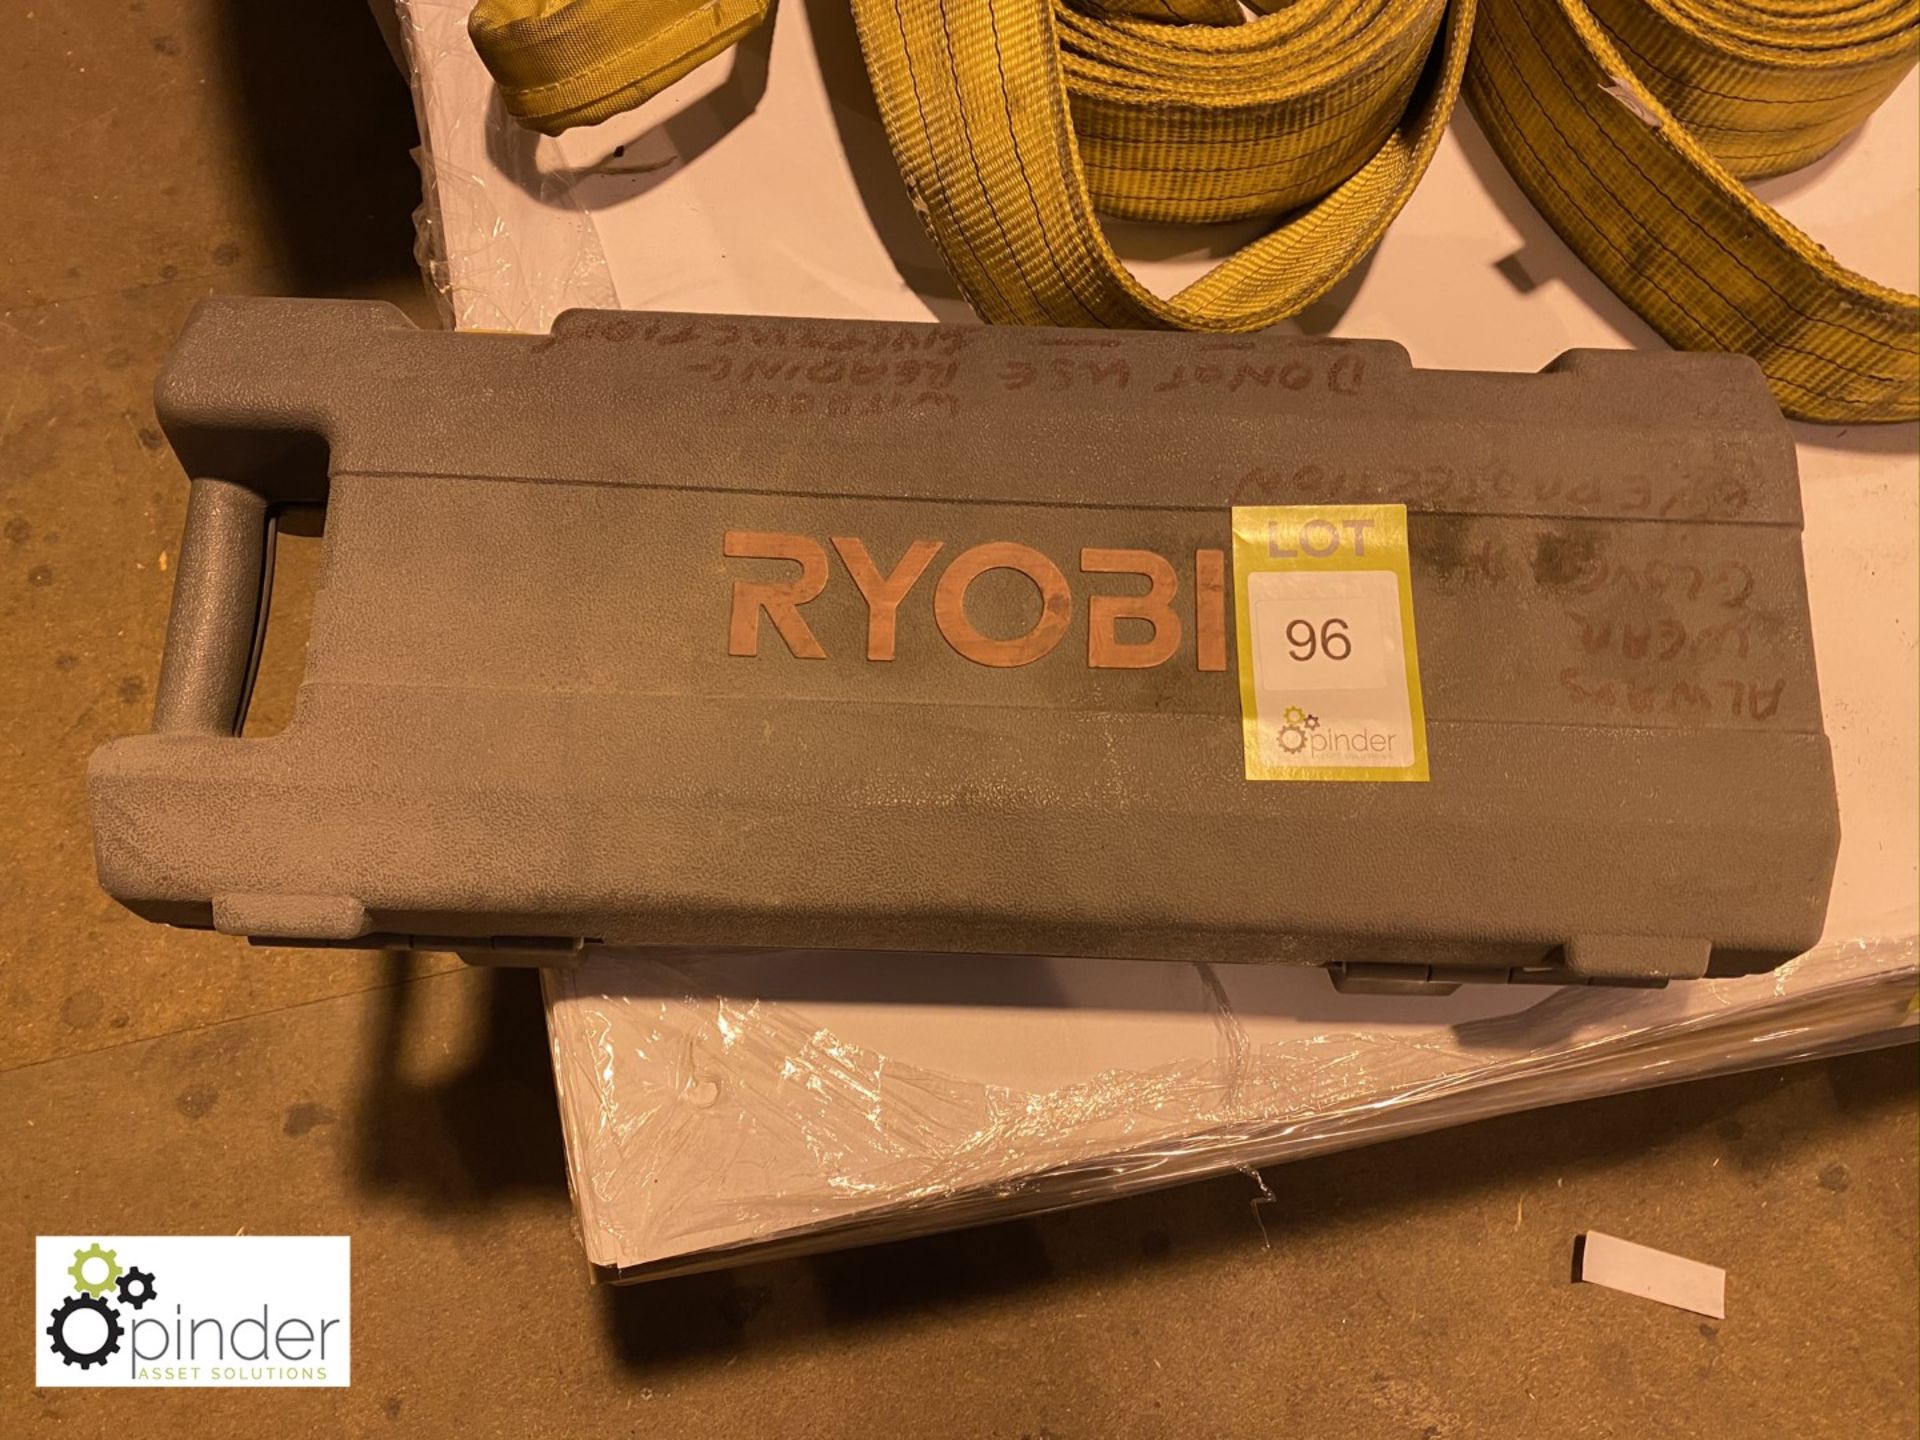 Ryobi ERS-80V Reciprocating Saw, 240volts - Image 2 of 2